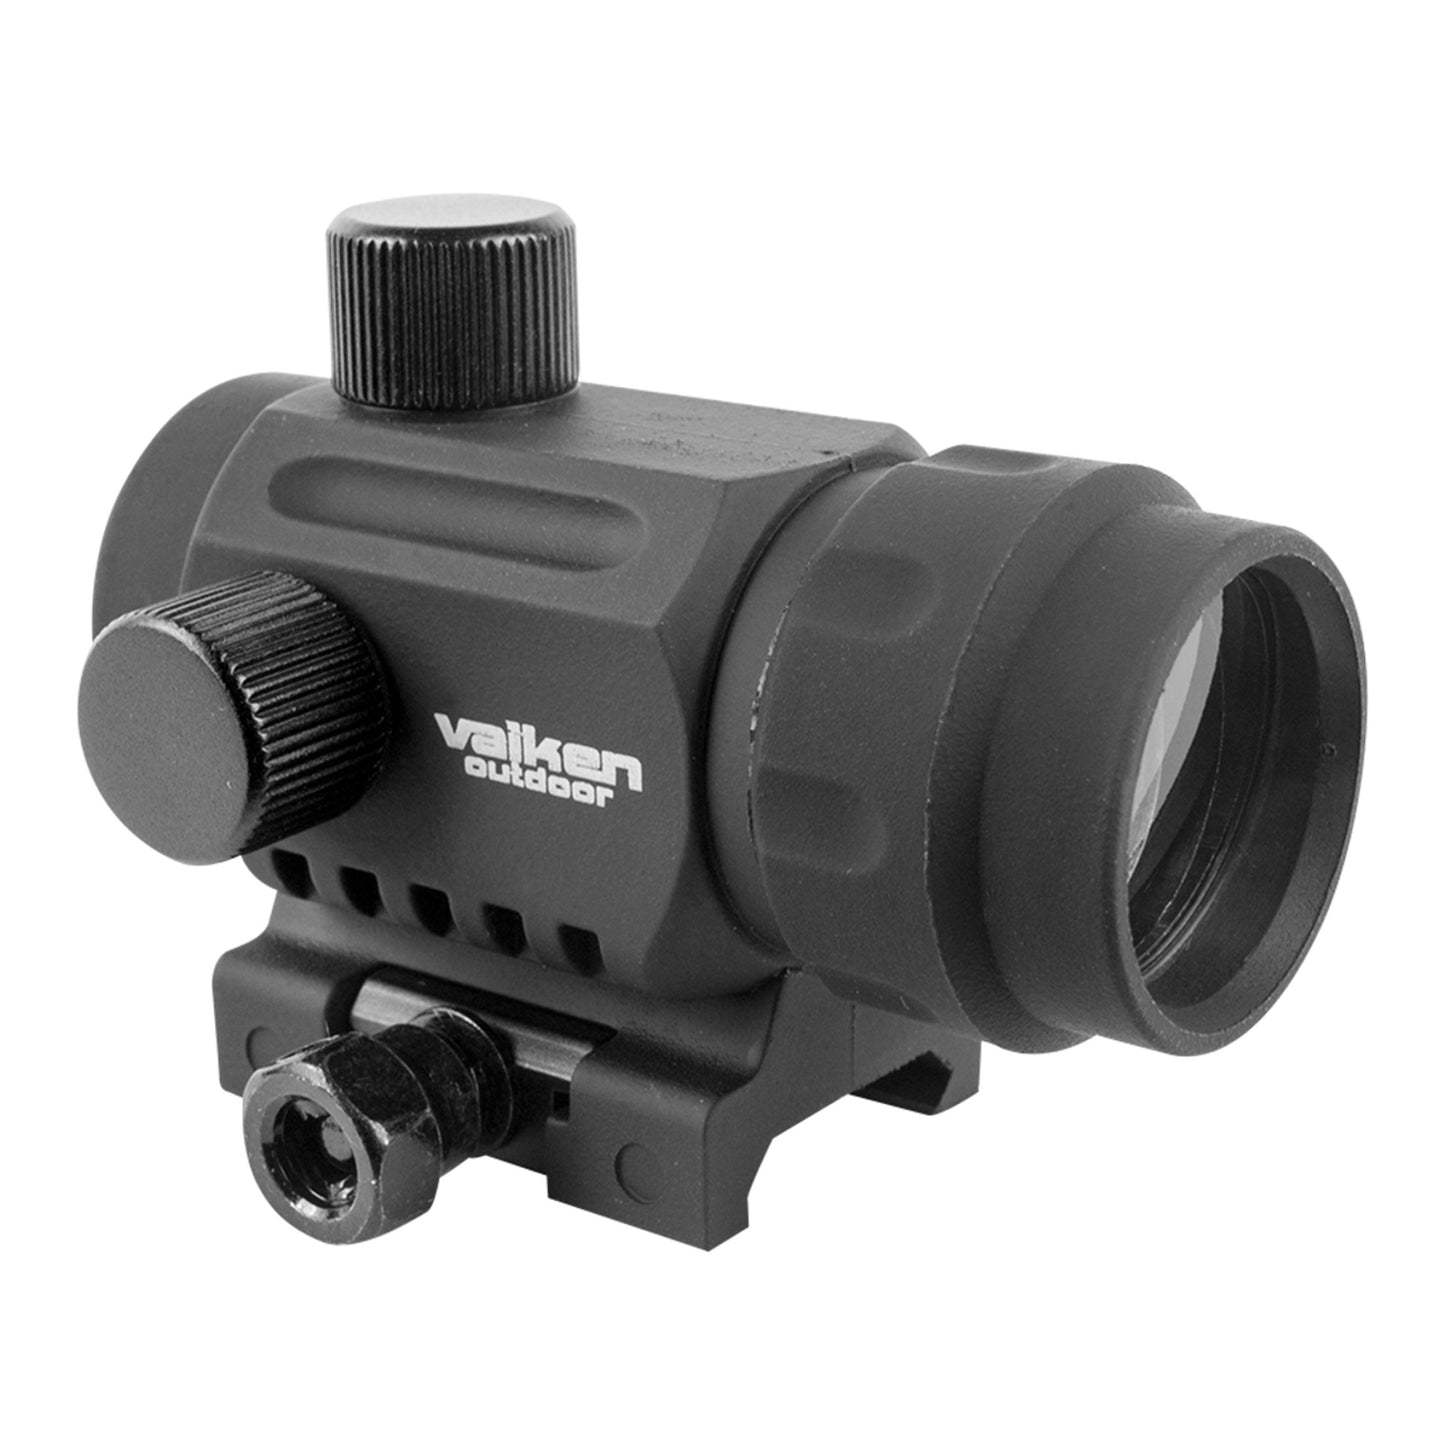 Valken Outdoor Mini Red Dot Sight RDA20 - Black T1 Style Replica CQB Airsoft Sight - Valken Paintball